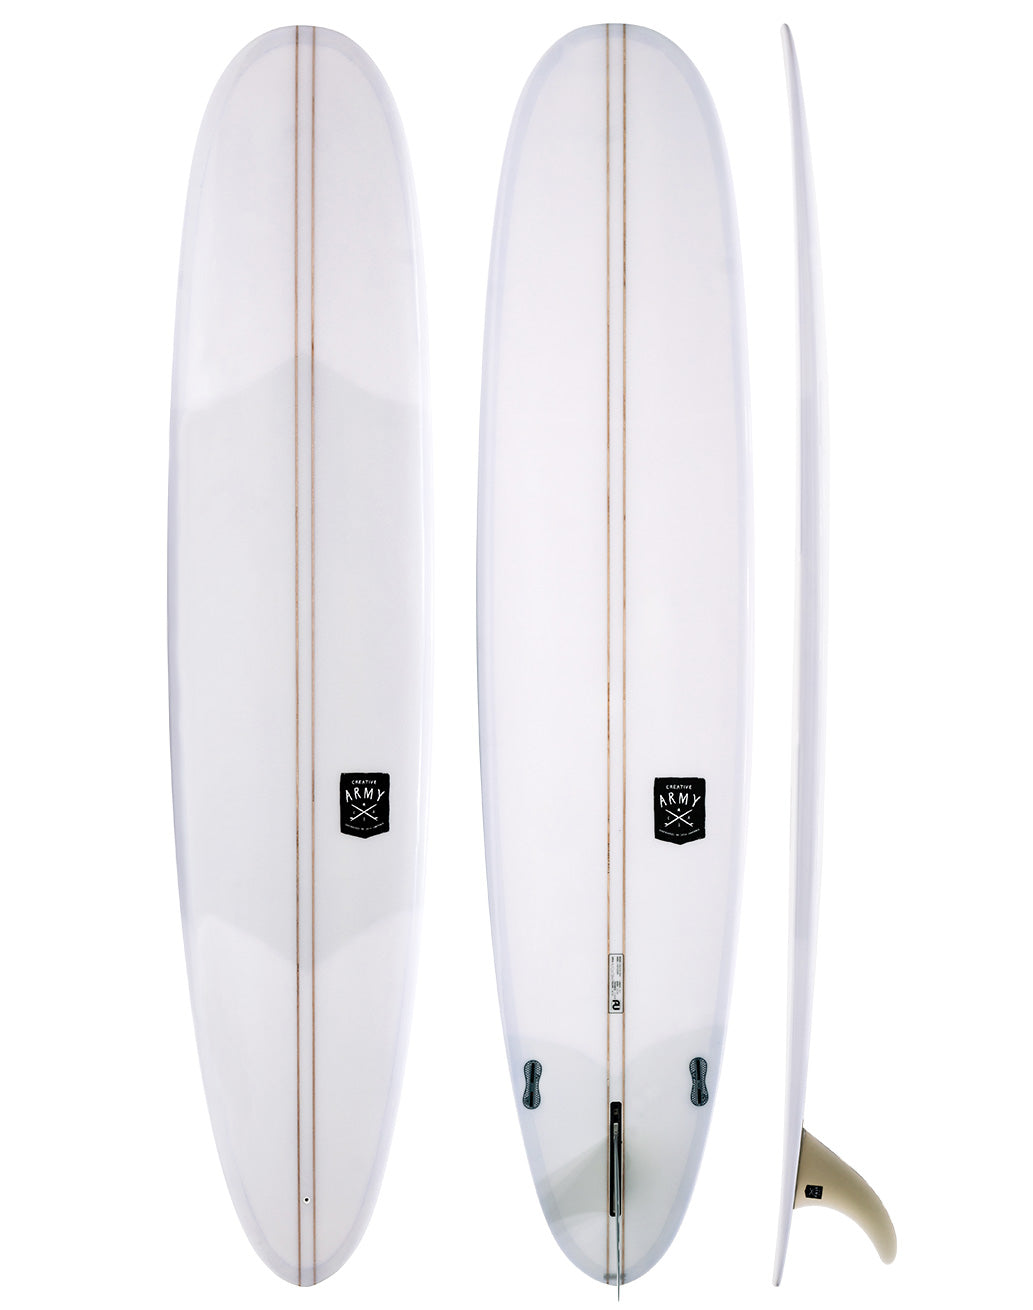 Creative Army Surfboards - Five Sugars white longboard